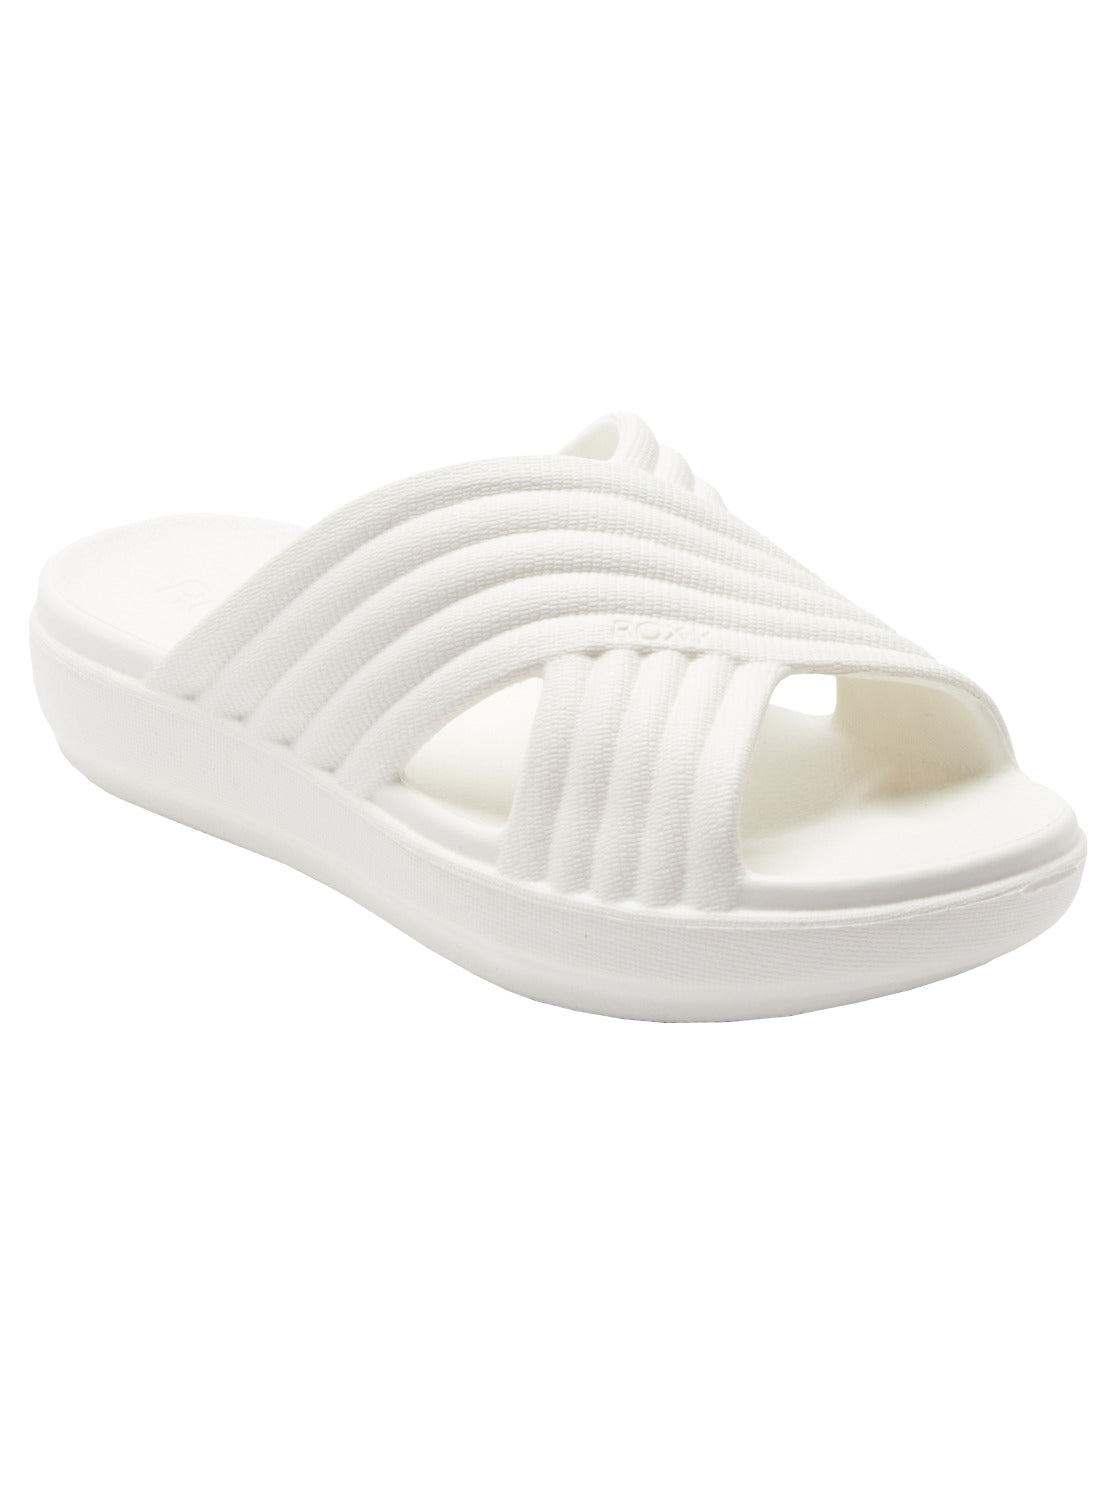 Roxy Rivie Womens Sandal WHT-White 6